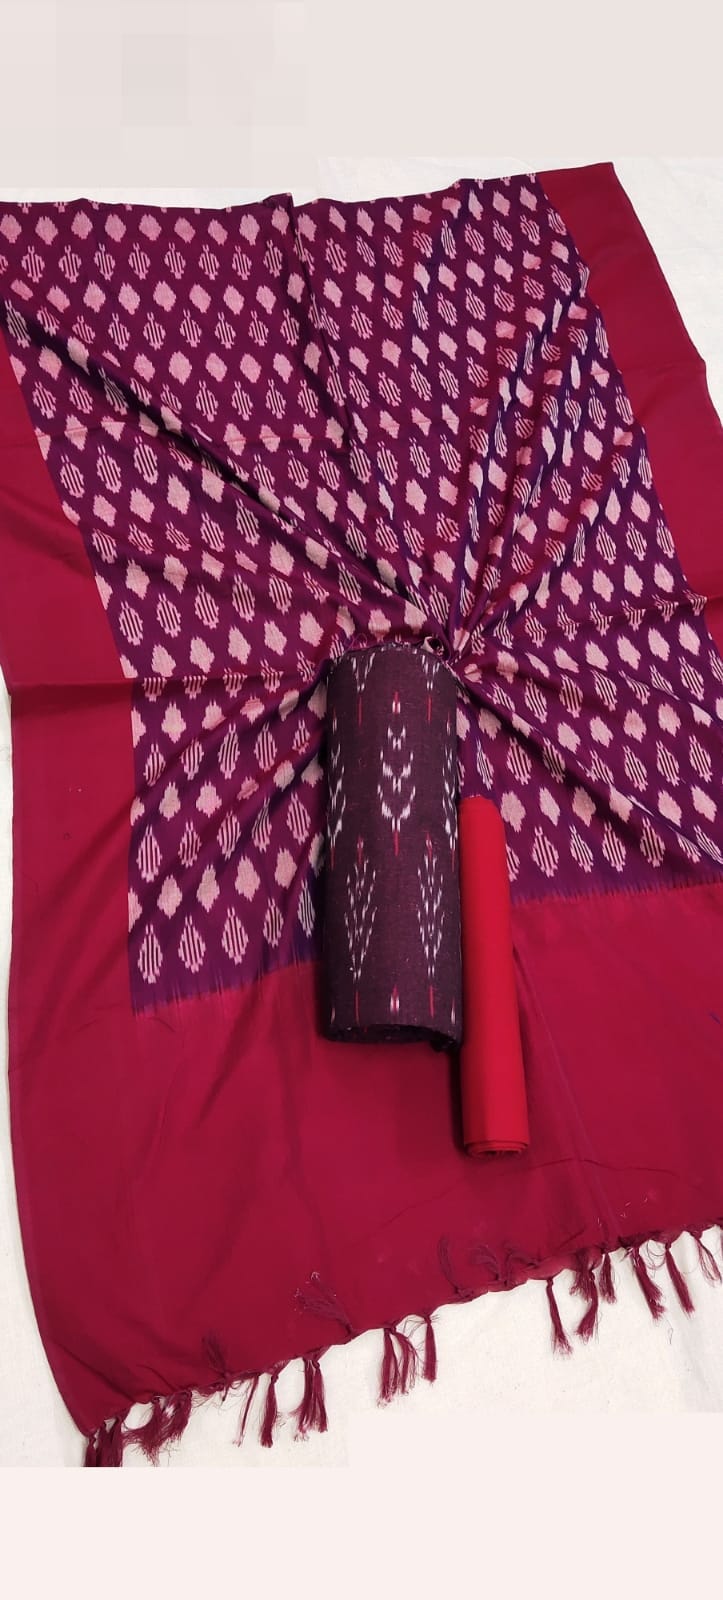 Double Ikat Mercerized Cotton Dress Material